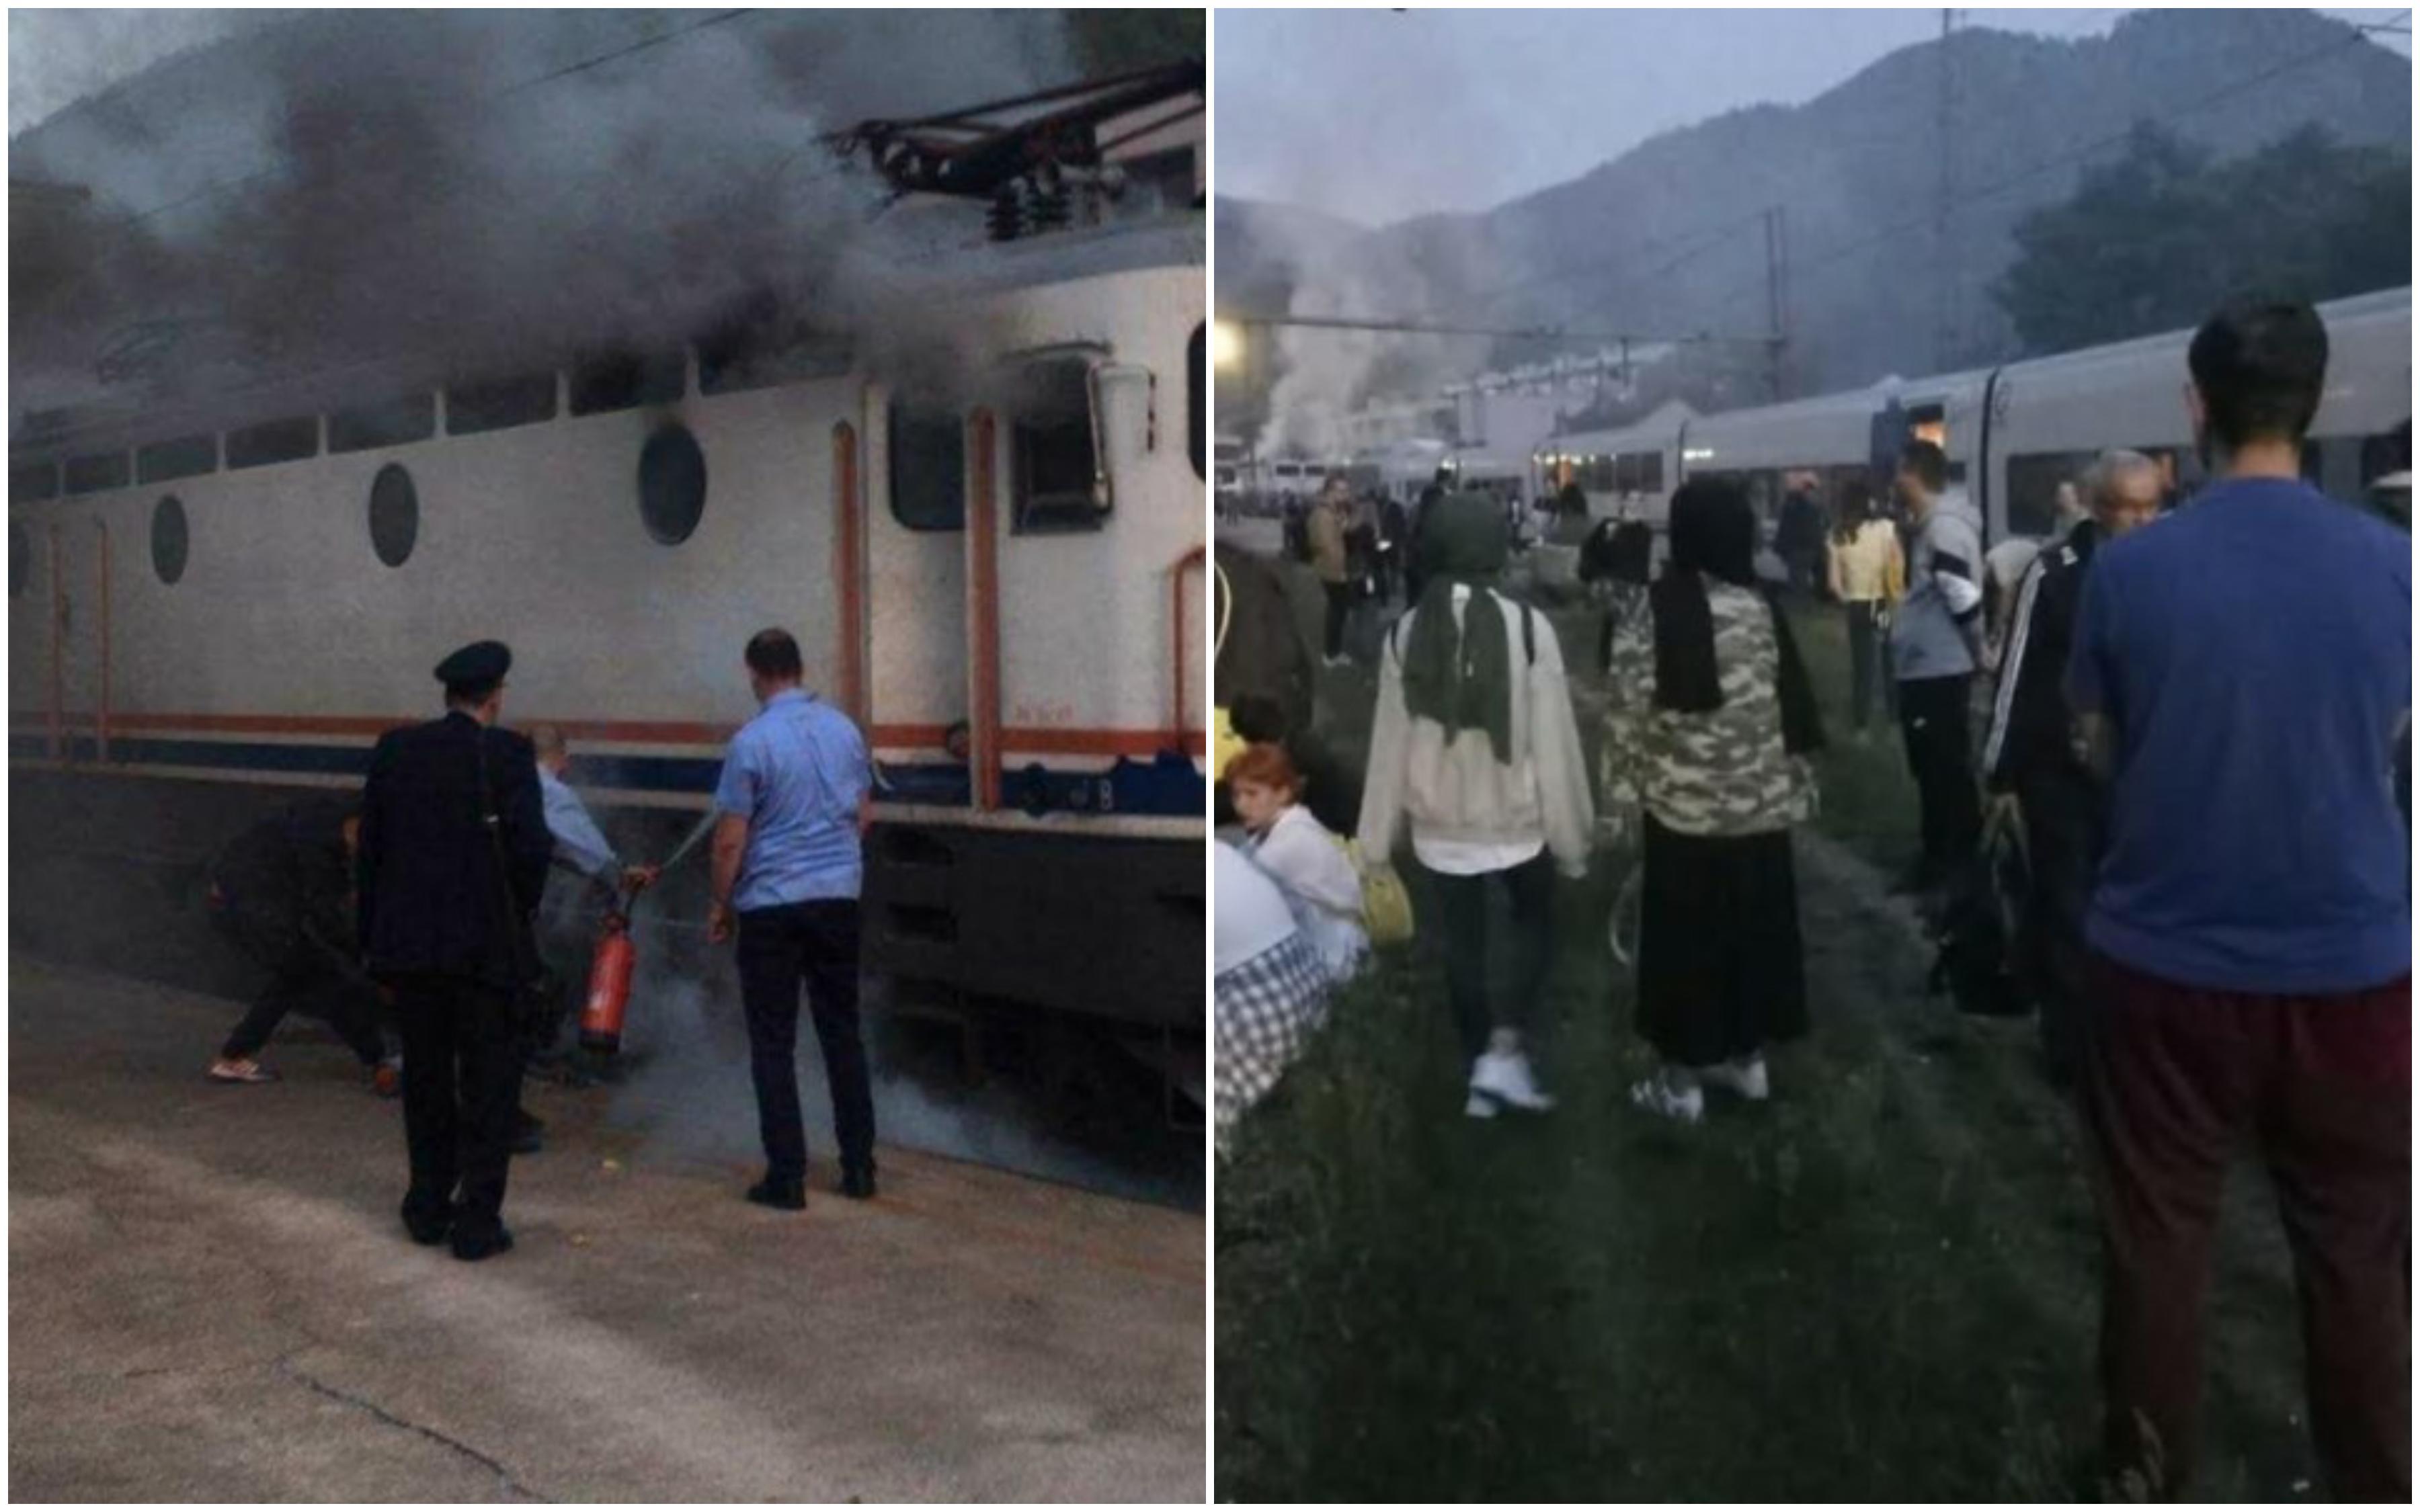 Putnici evakuirani: Nepoznat uzrok požara - Avaz